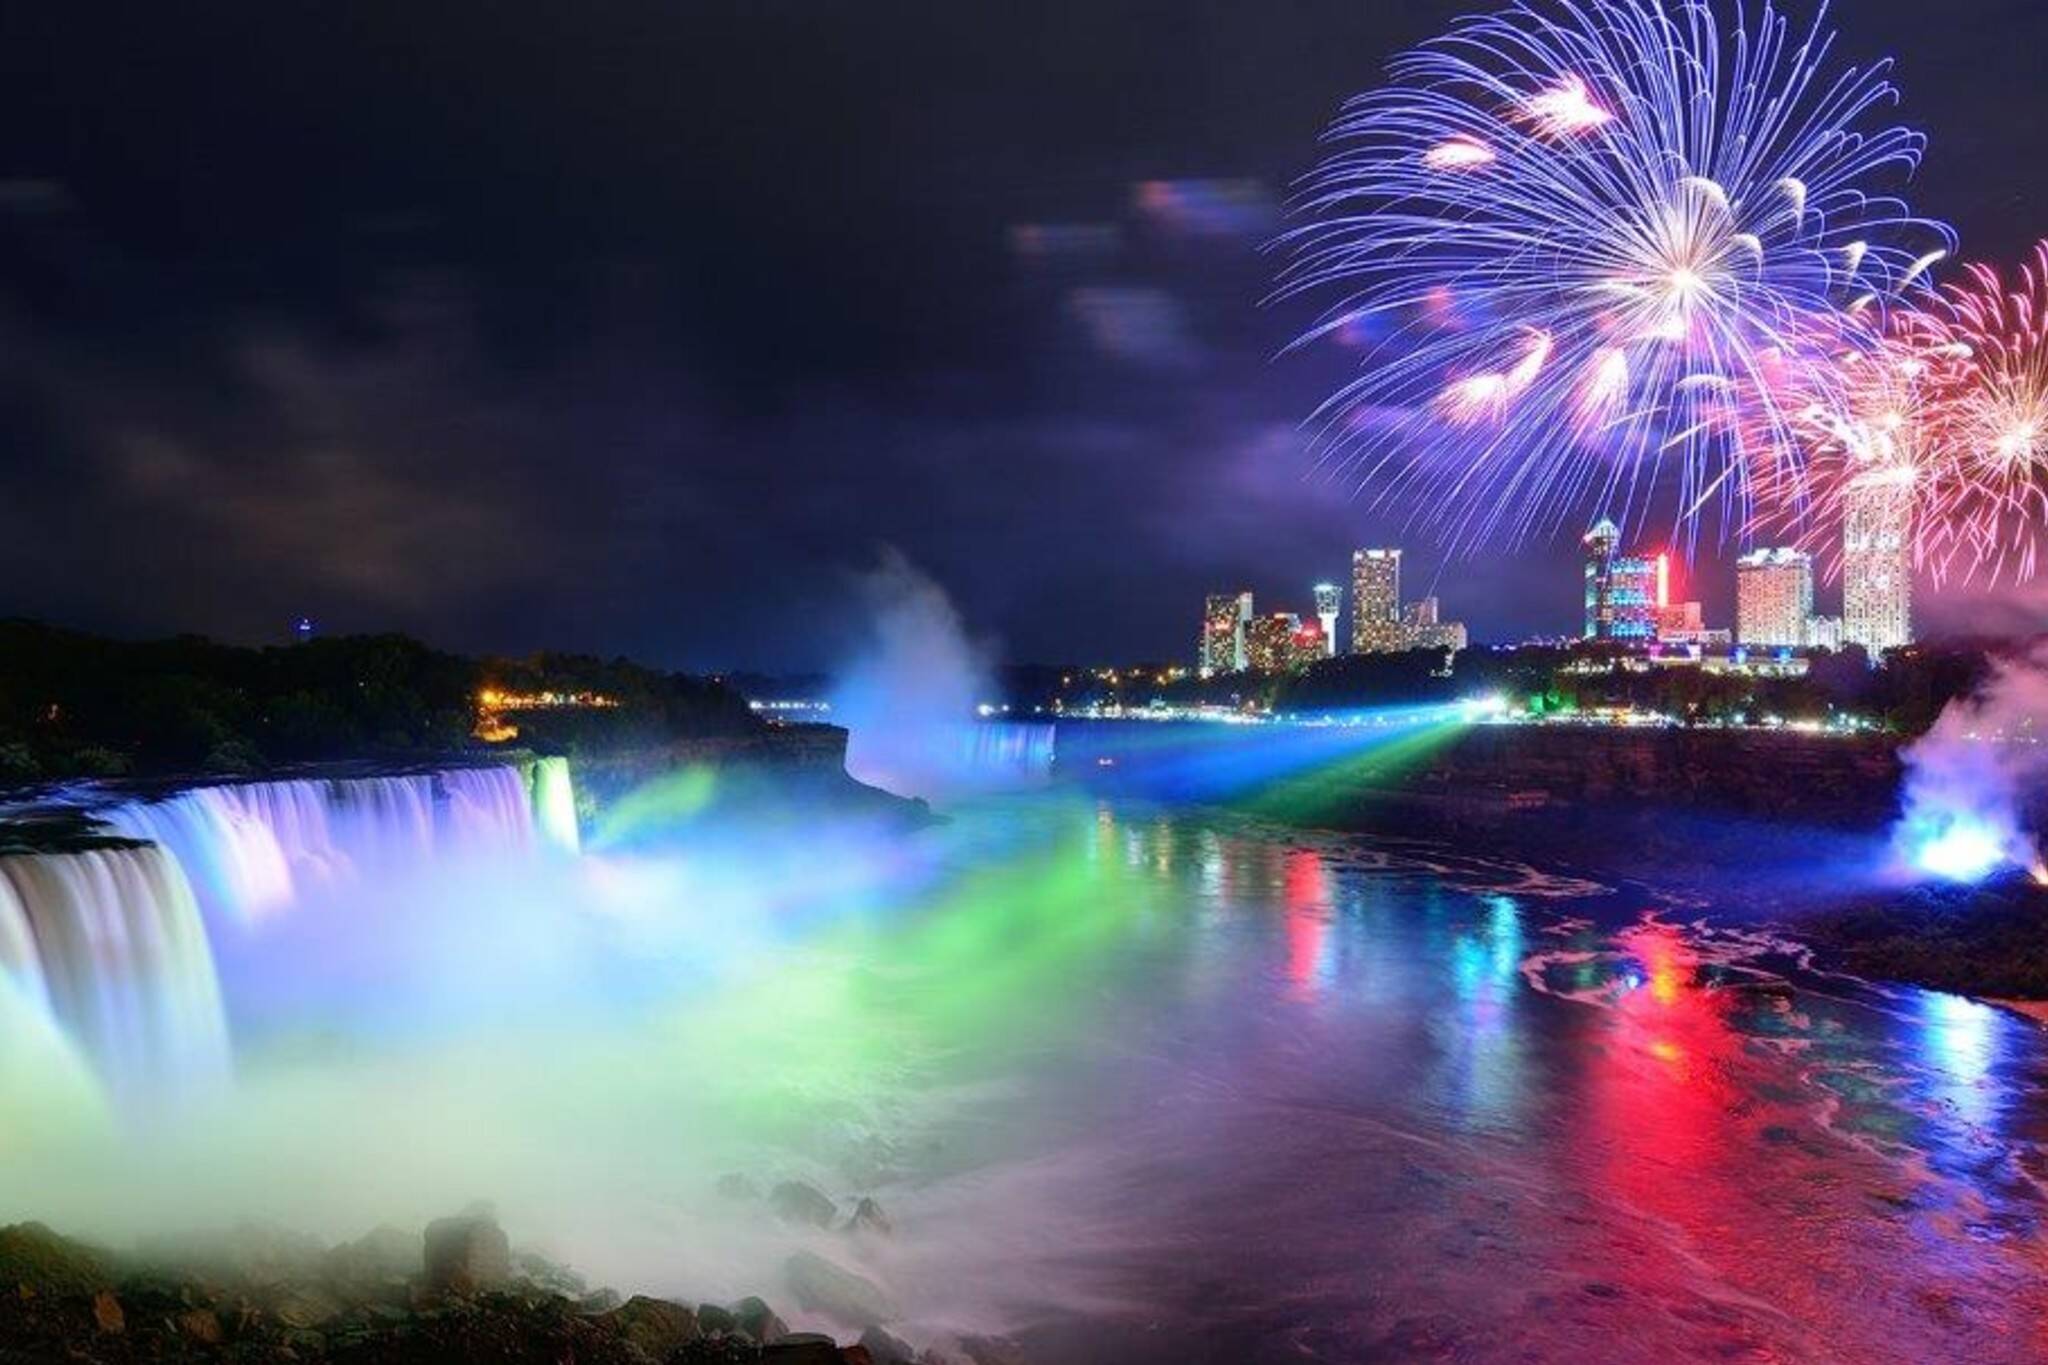 A magical lights festival opens at Niagara Falls this week